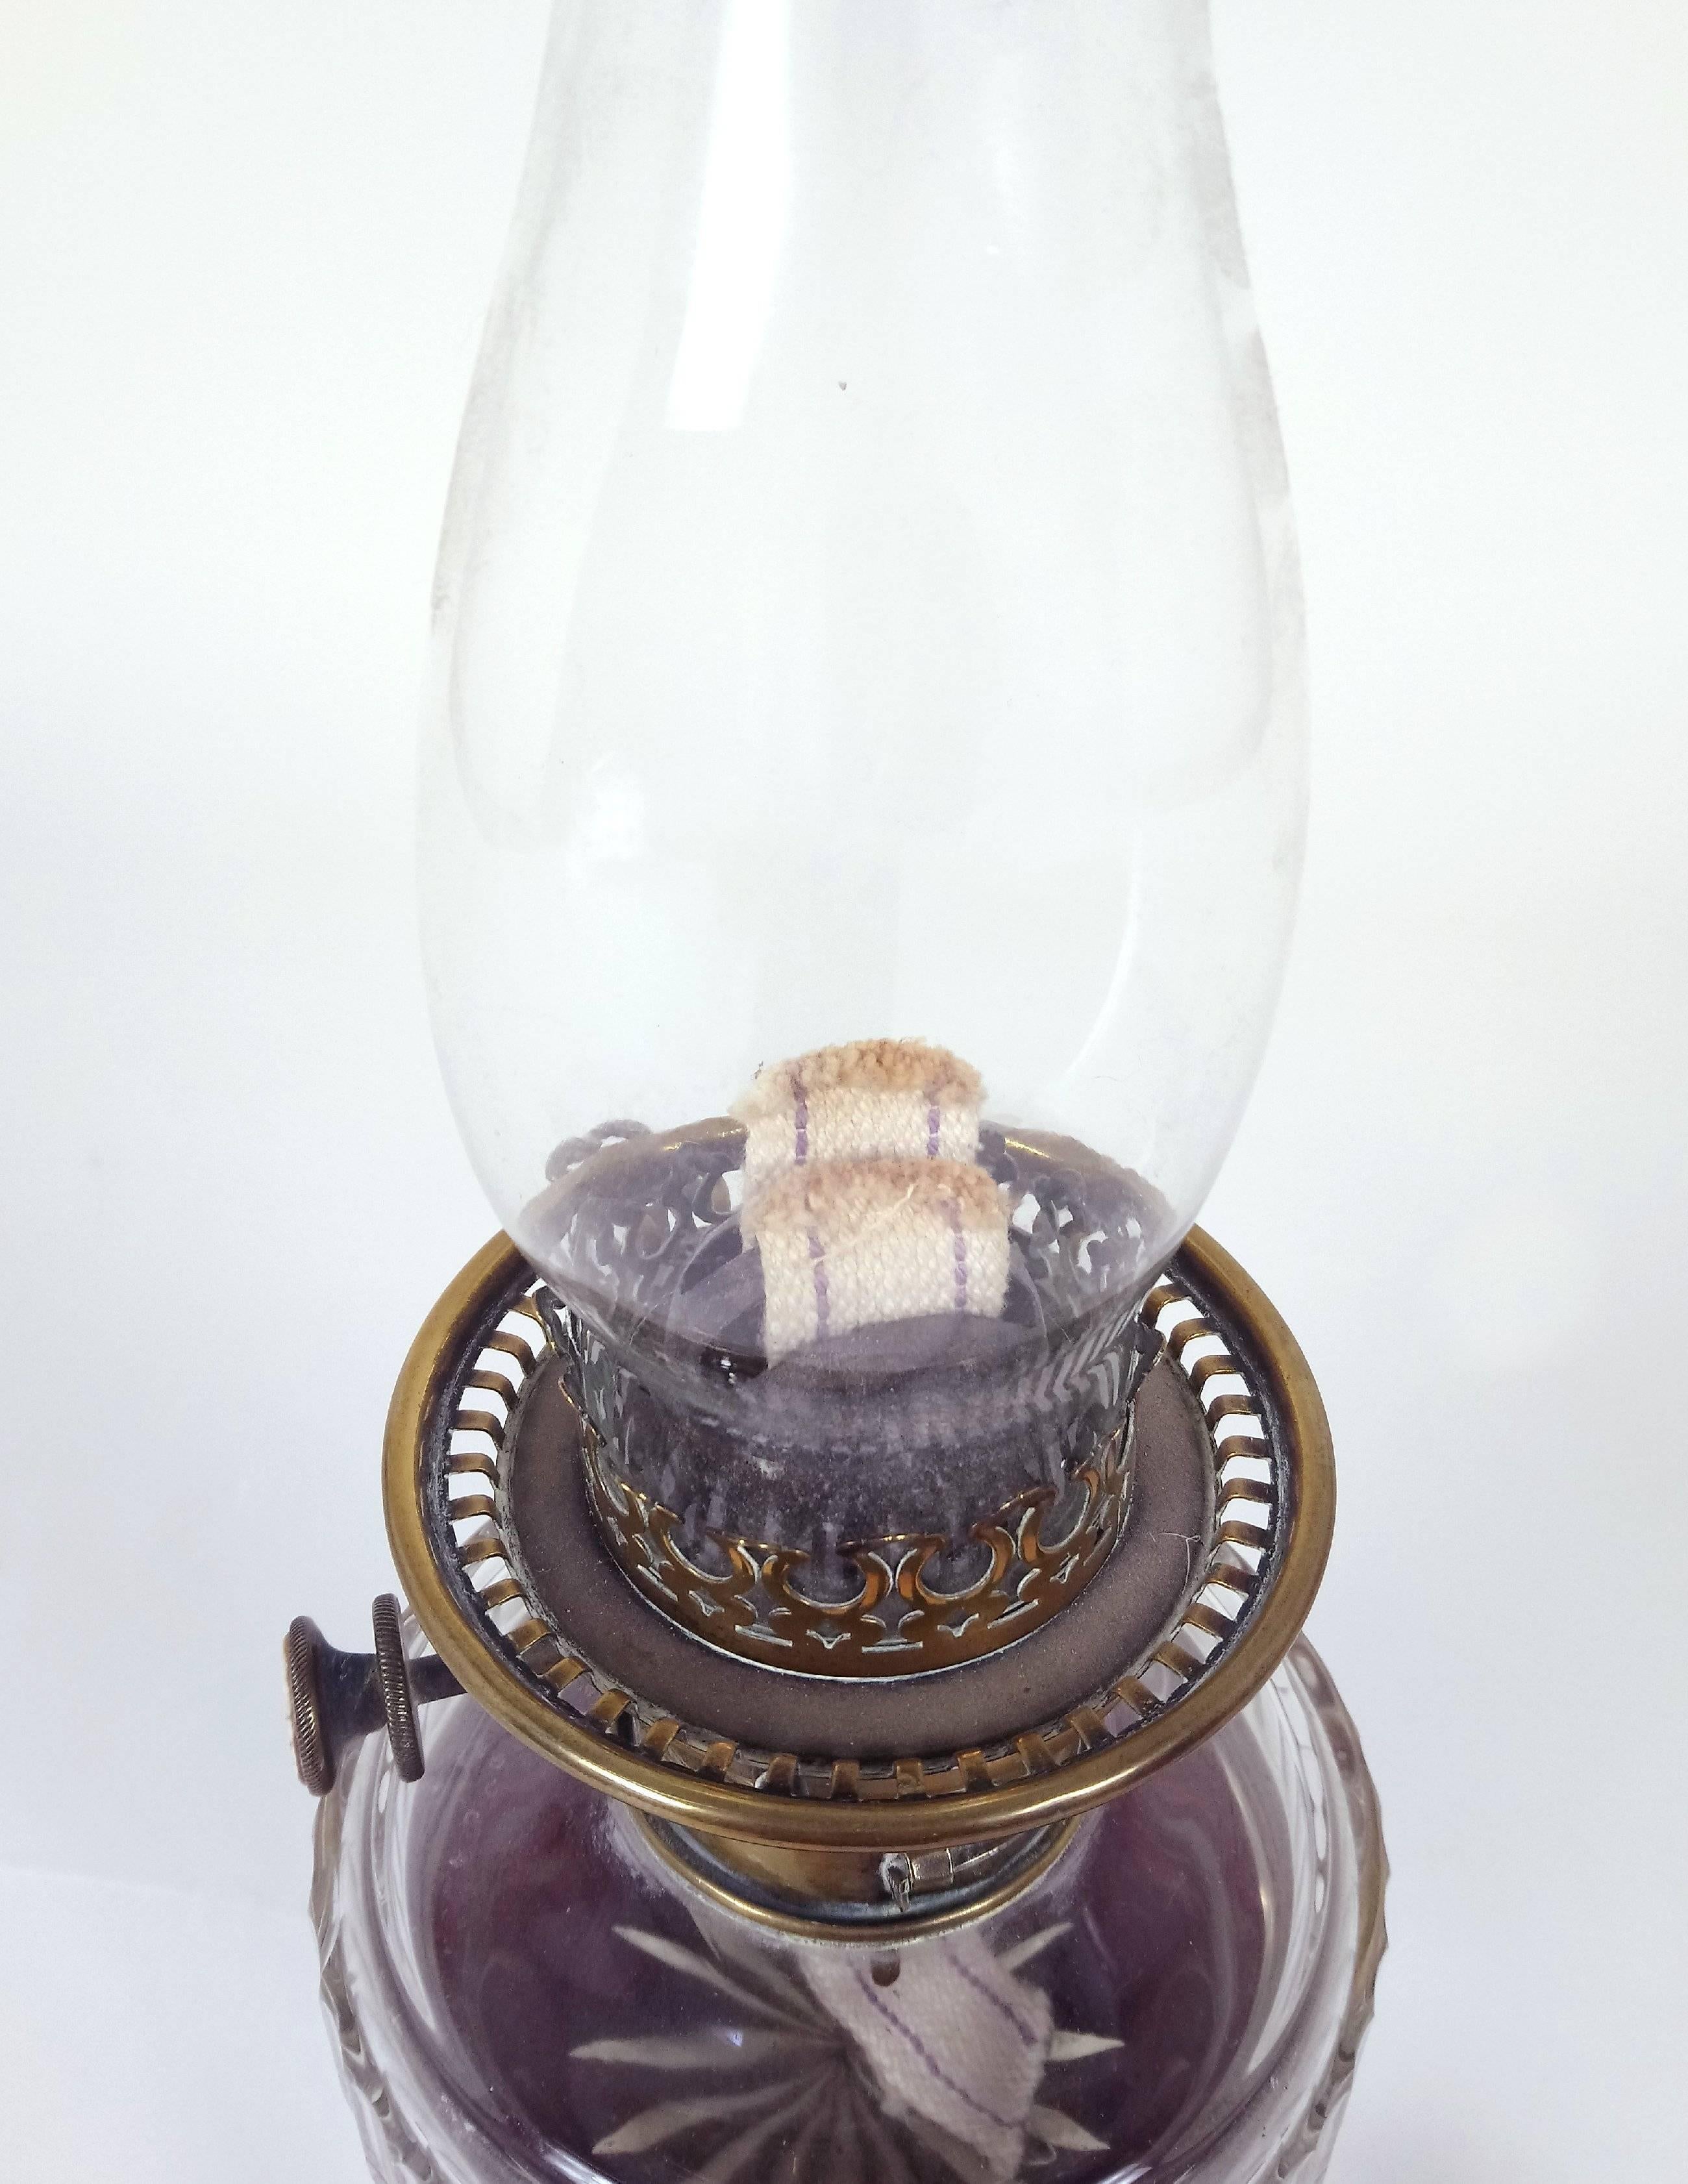 19th century oil lamps